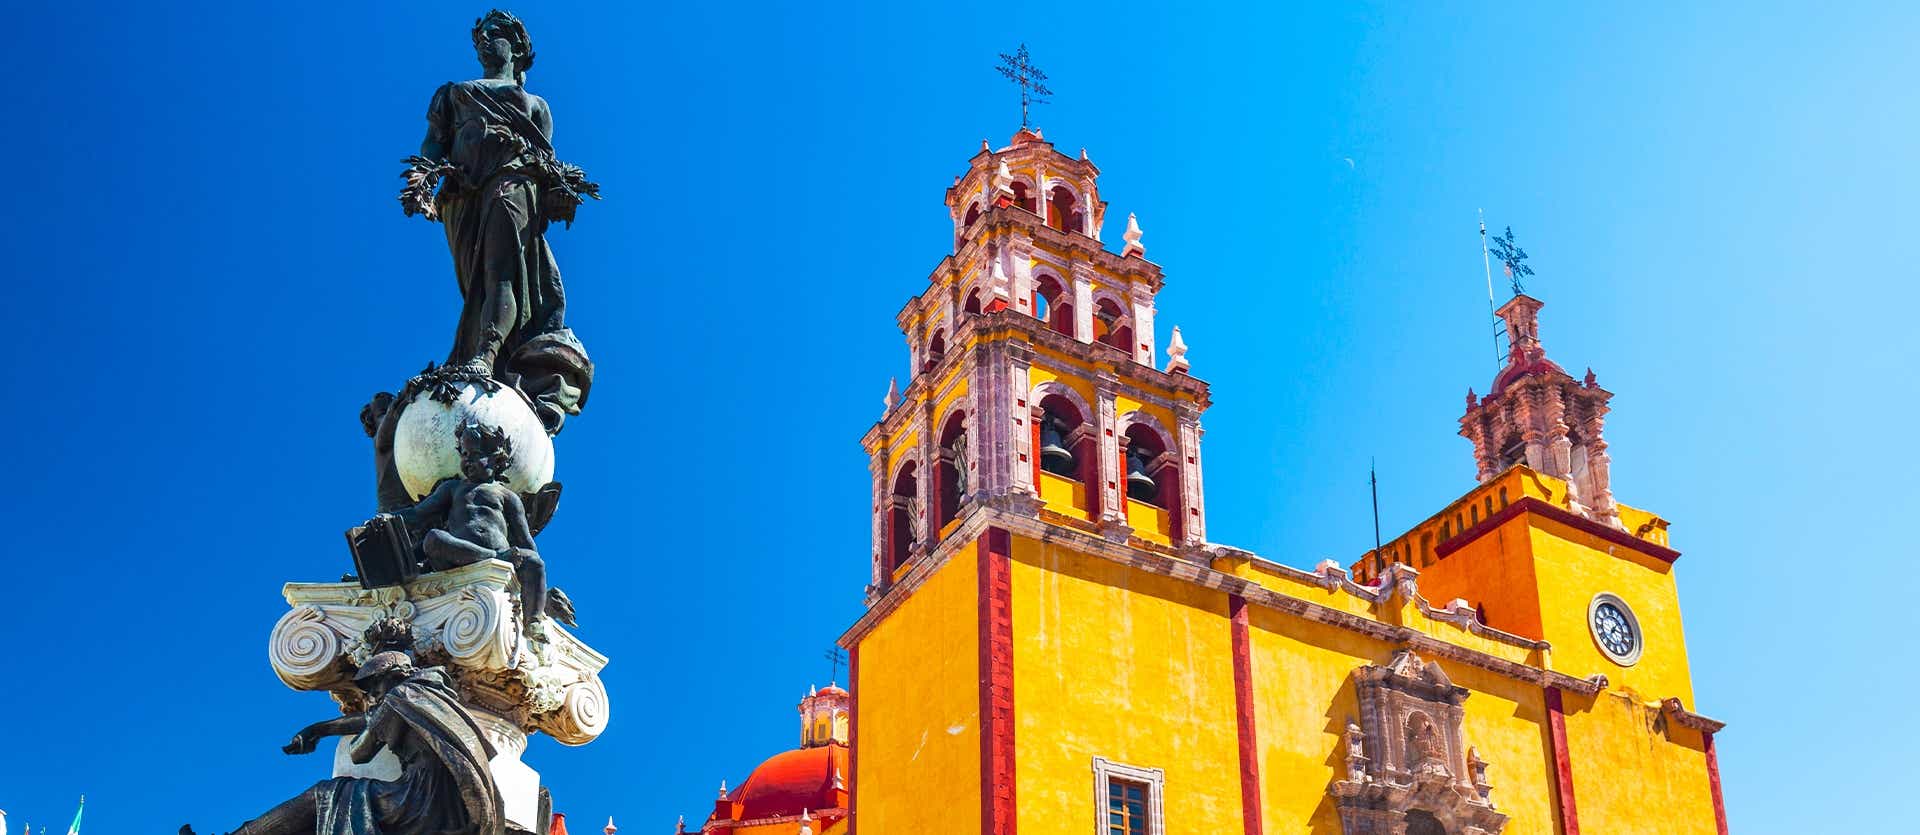 Basilica of Our Lady of Guanajuato <span class="iconos separador"></span> Guanajuato